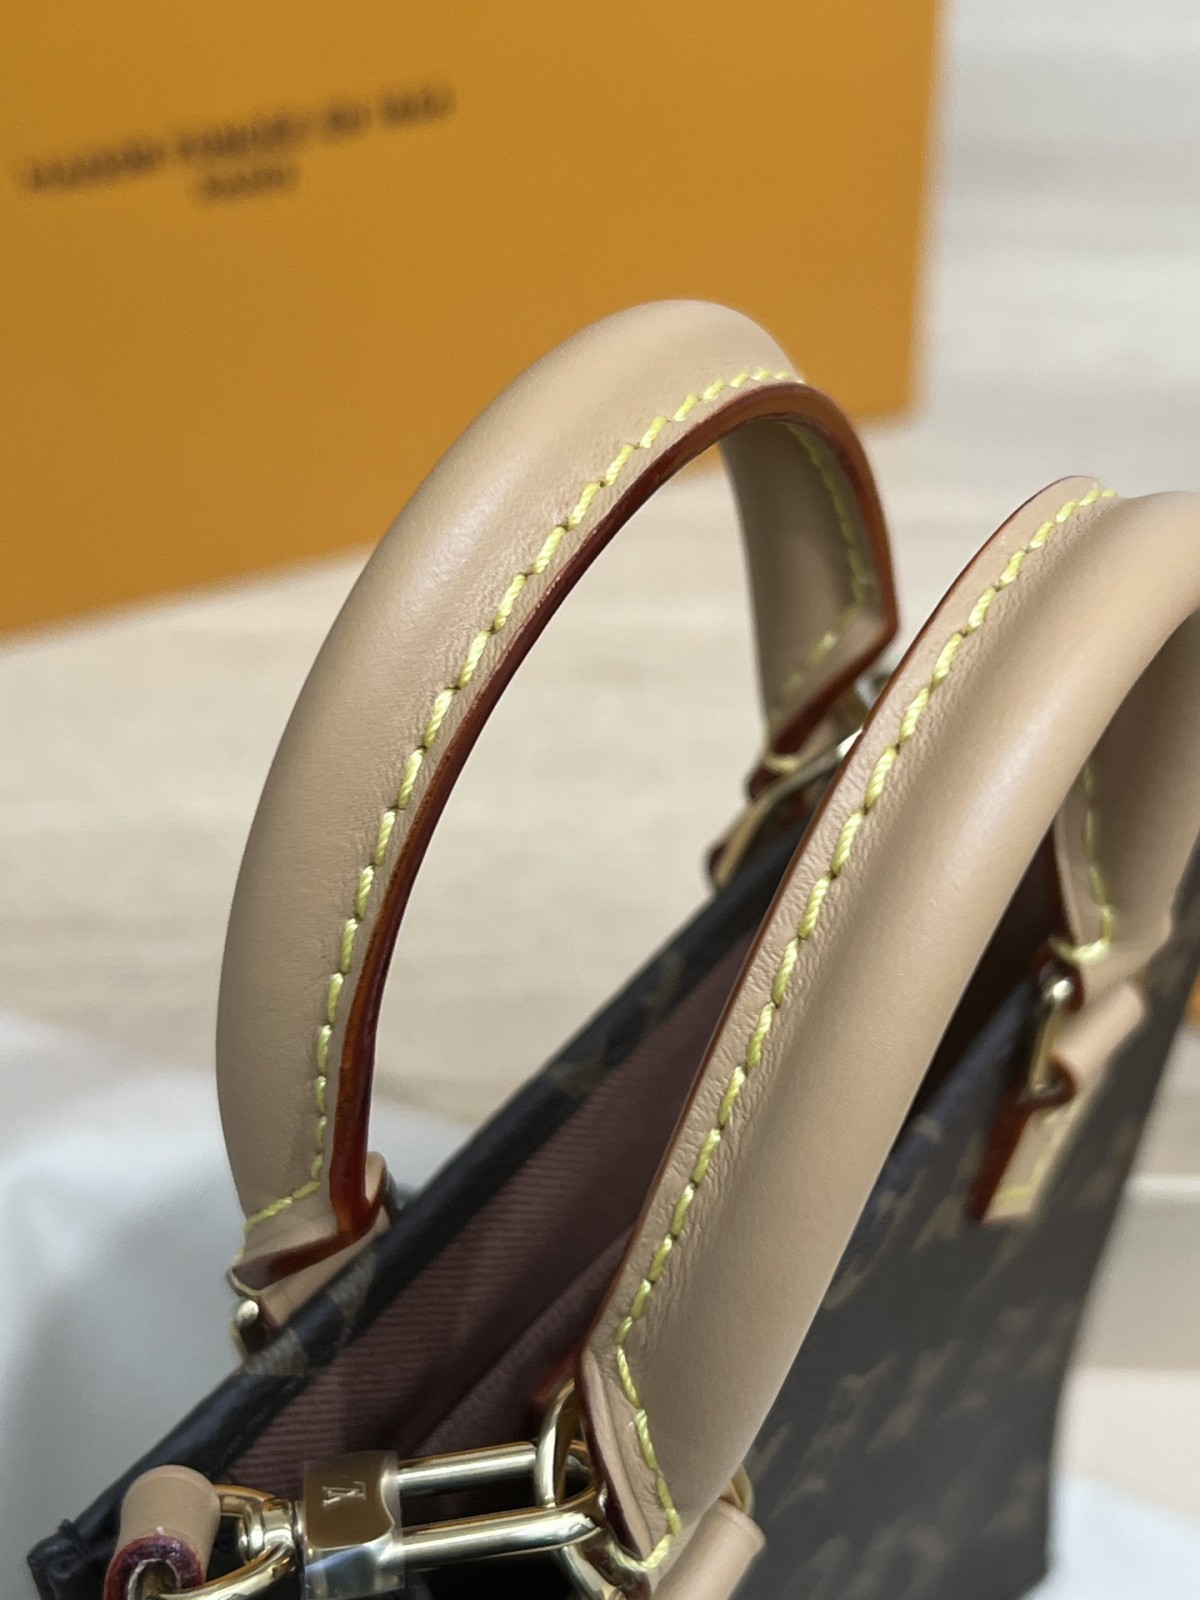 How good quality is a Shebag Louis Vuitton PETIT SAC PLAT bag（2023 udpated）-Beste Qualität gefälschte Louis Vuitton-Taschen Online-Shop, Replik-Designer-Tasche ru